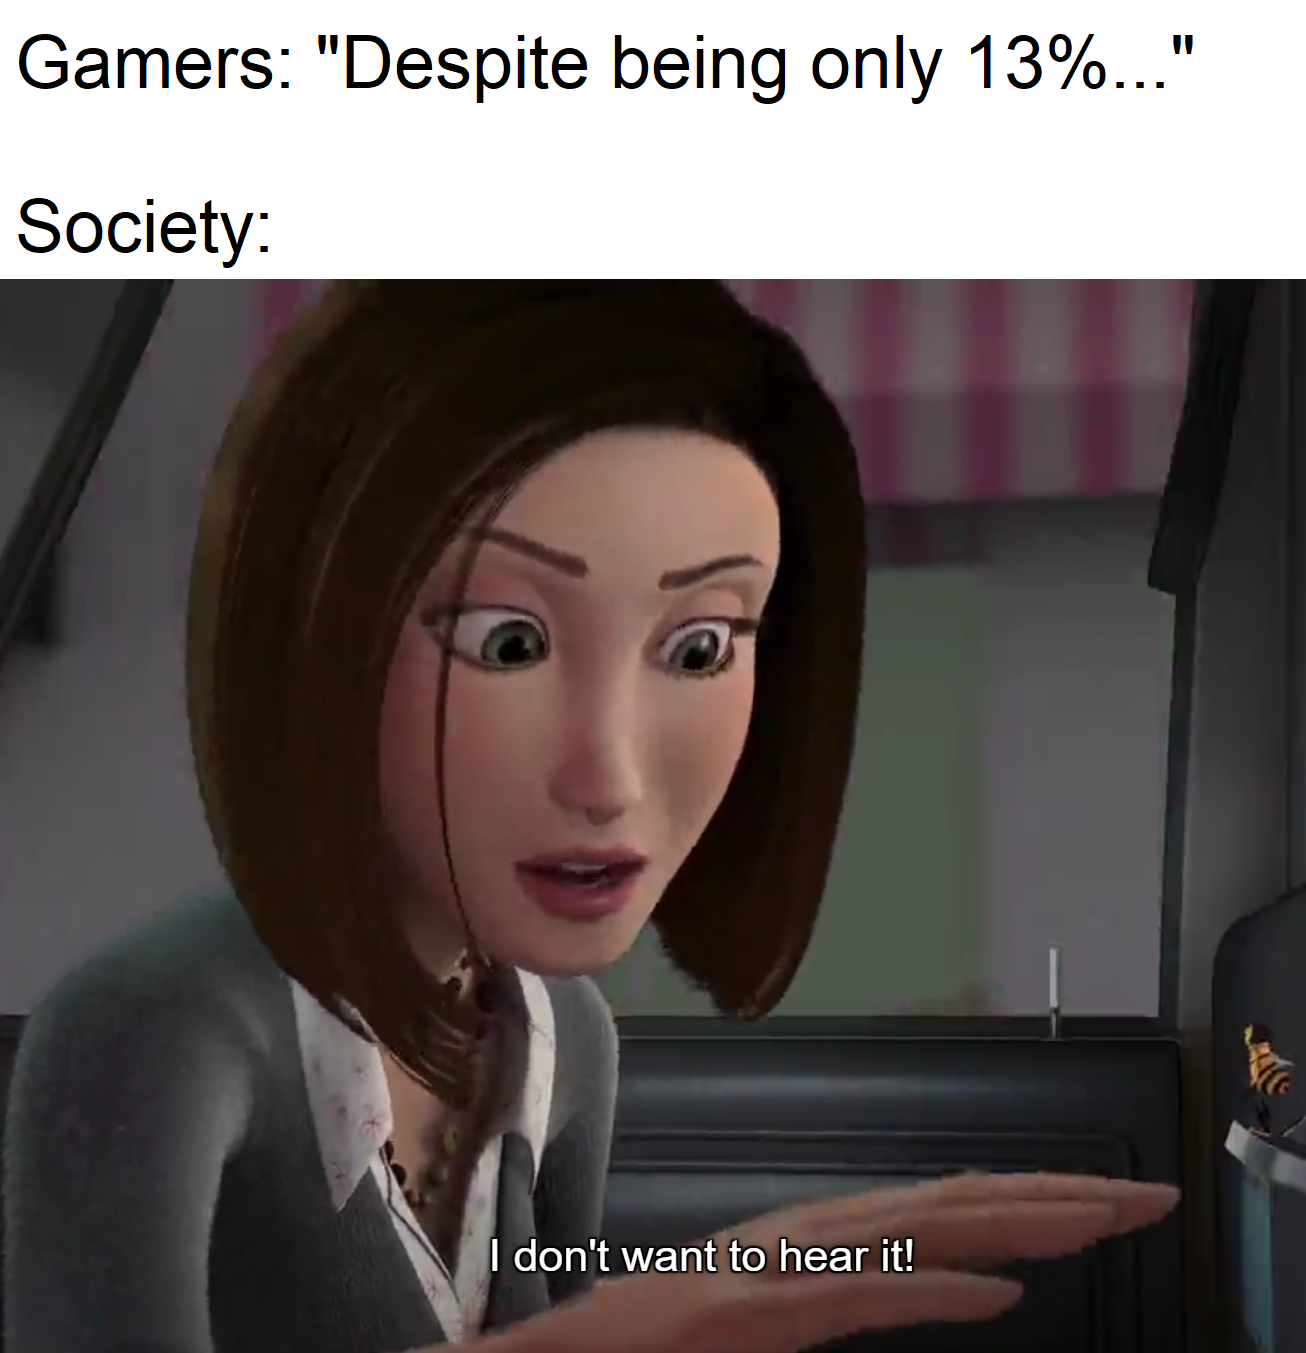 Still think that gamers aren't oppressed?